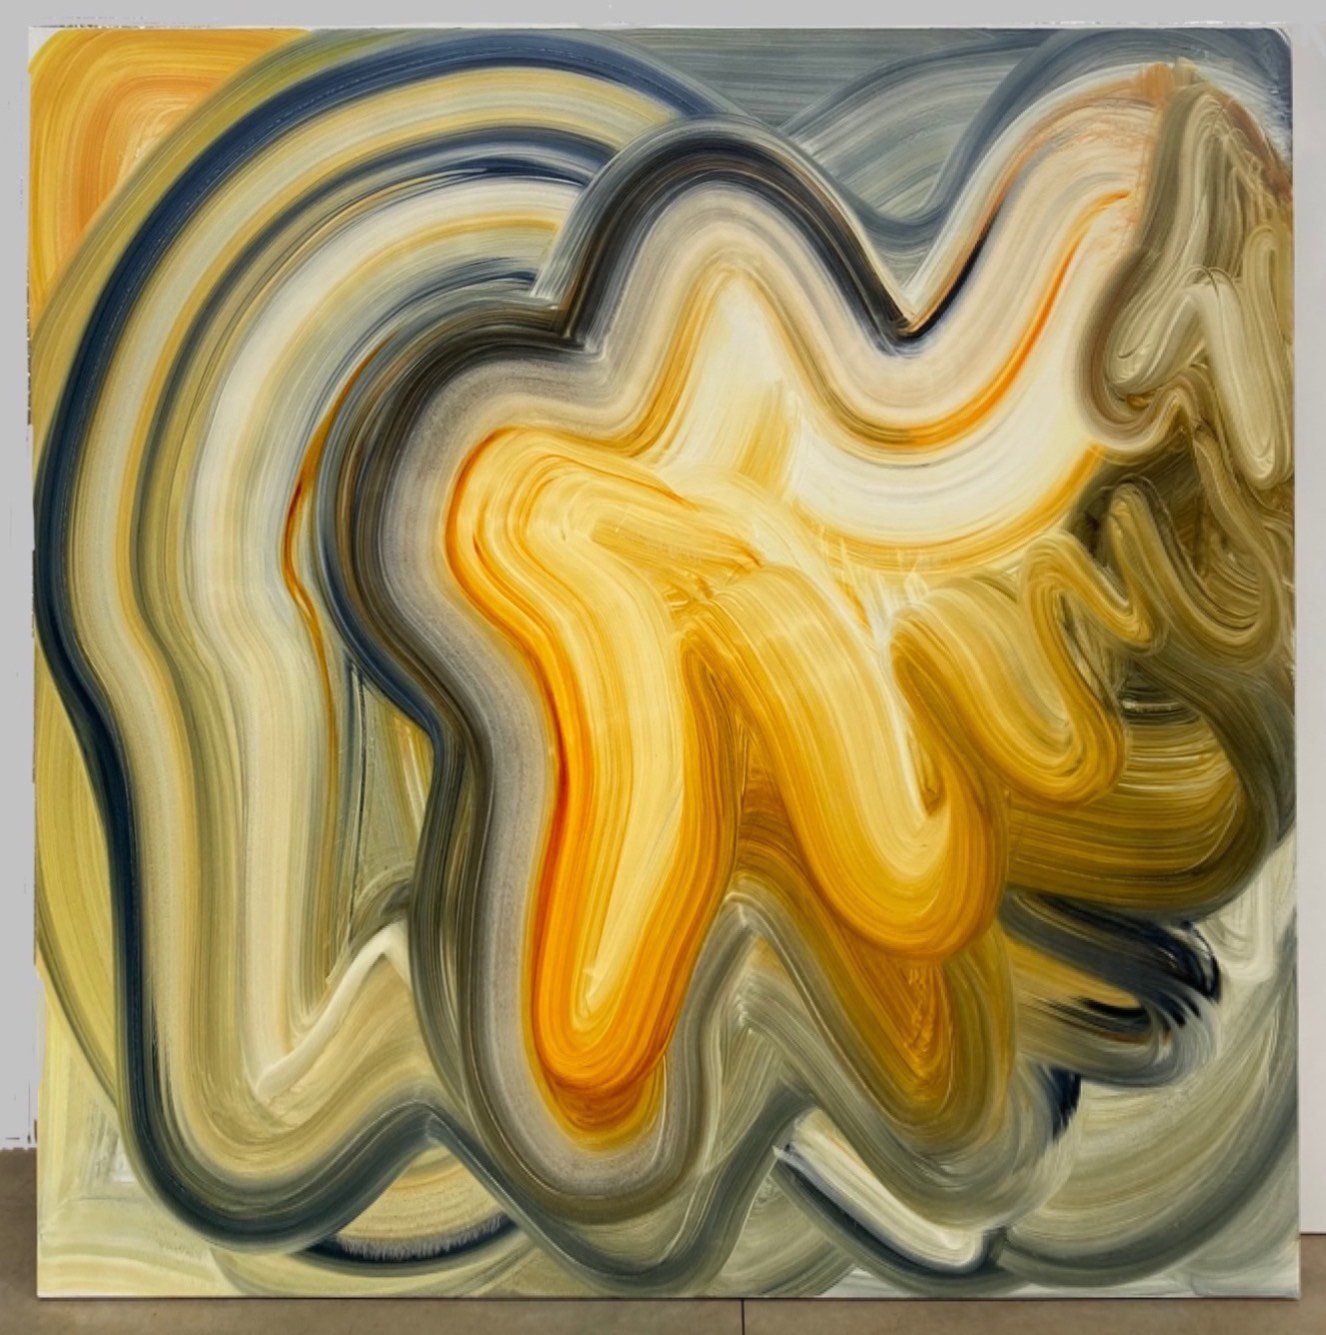  72x72” (183x183cm) oil on canvas, 2022 